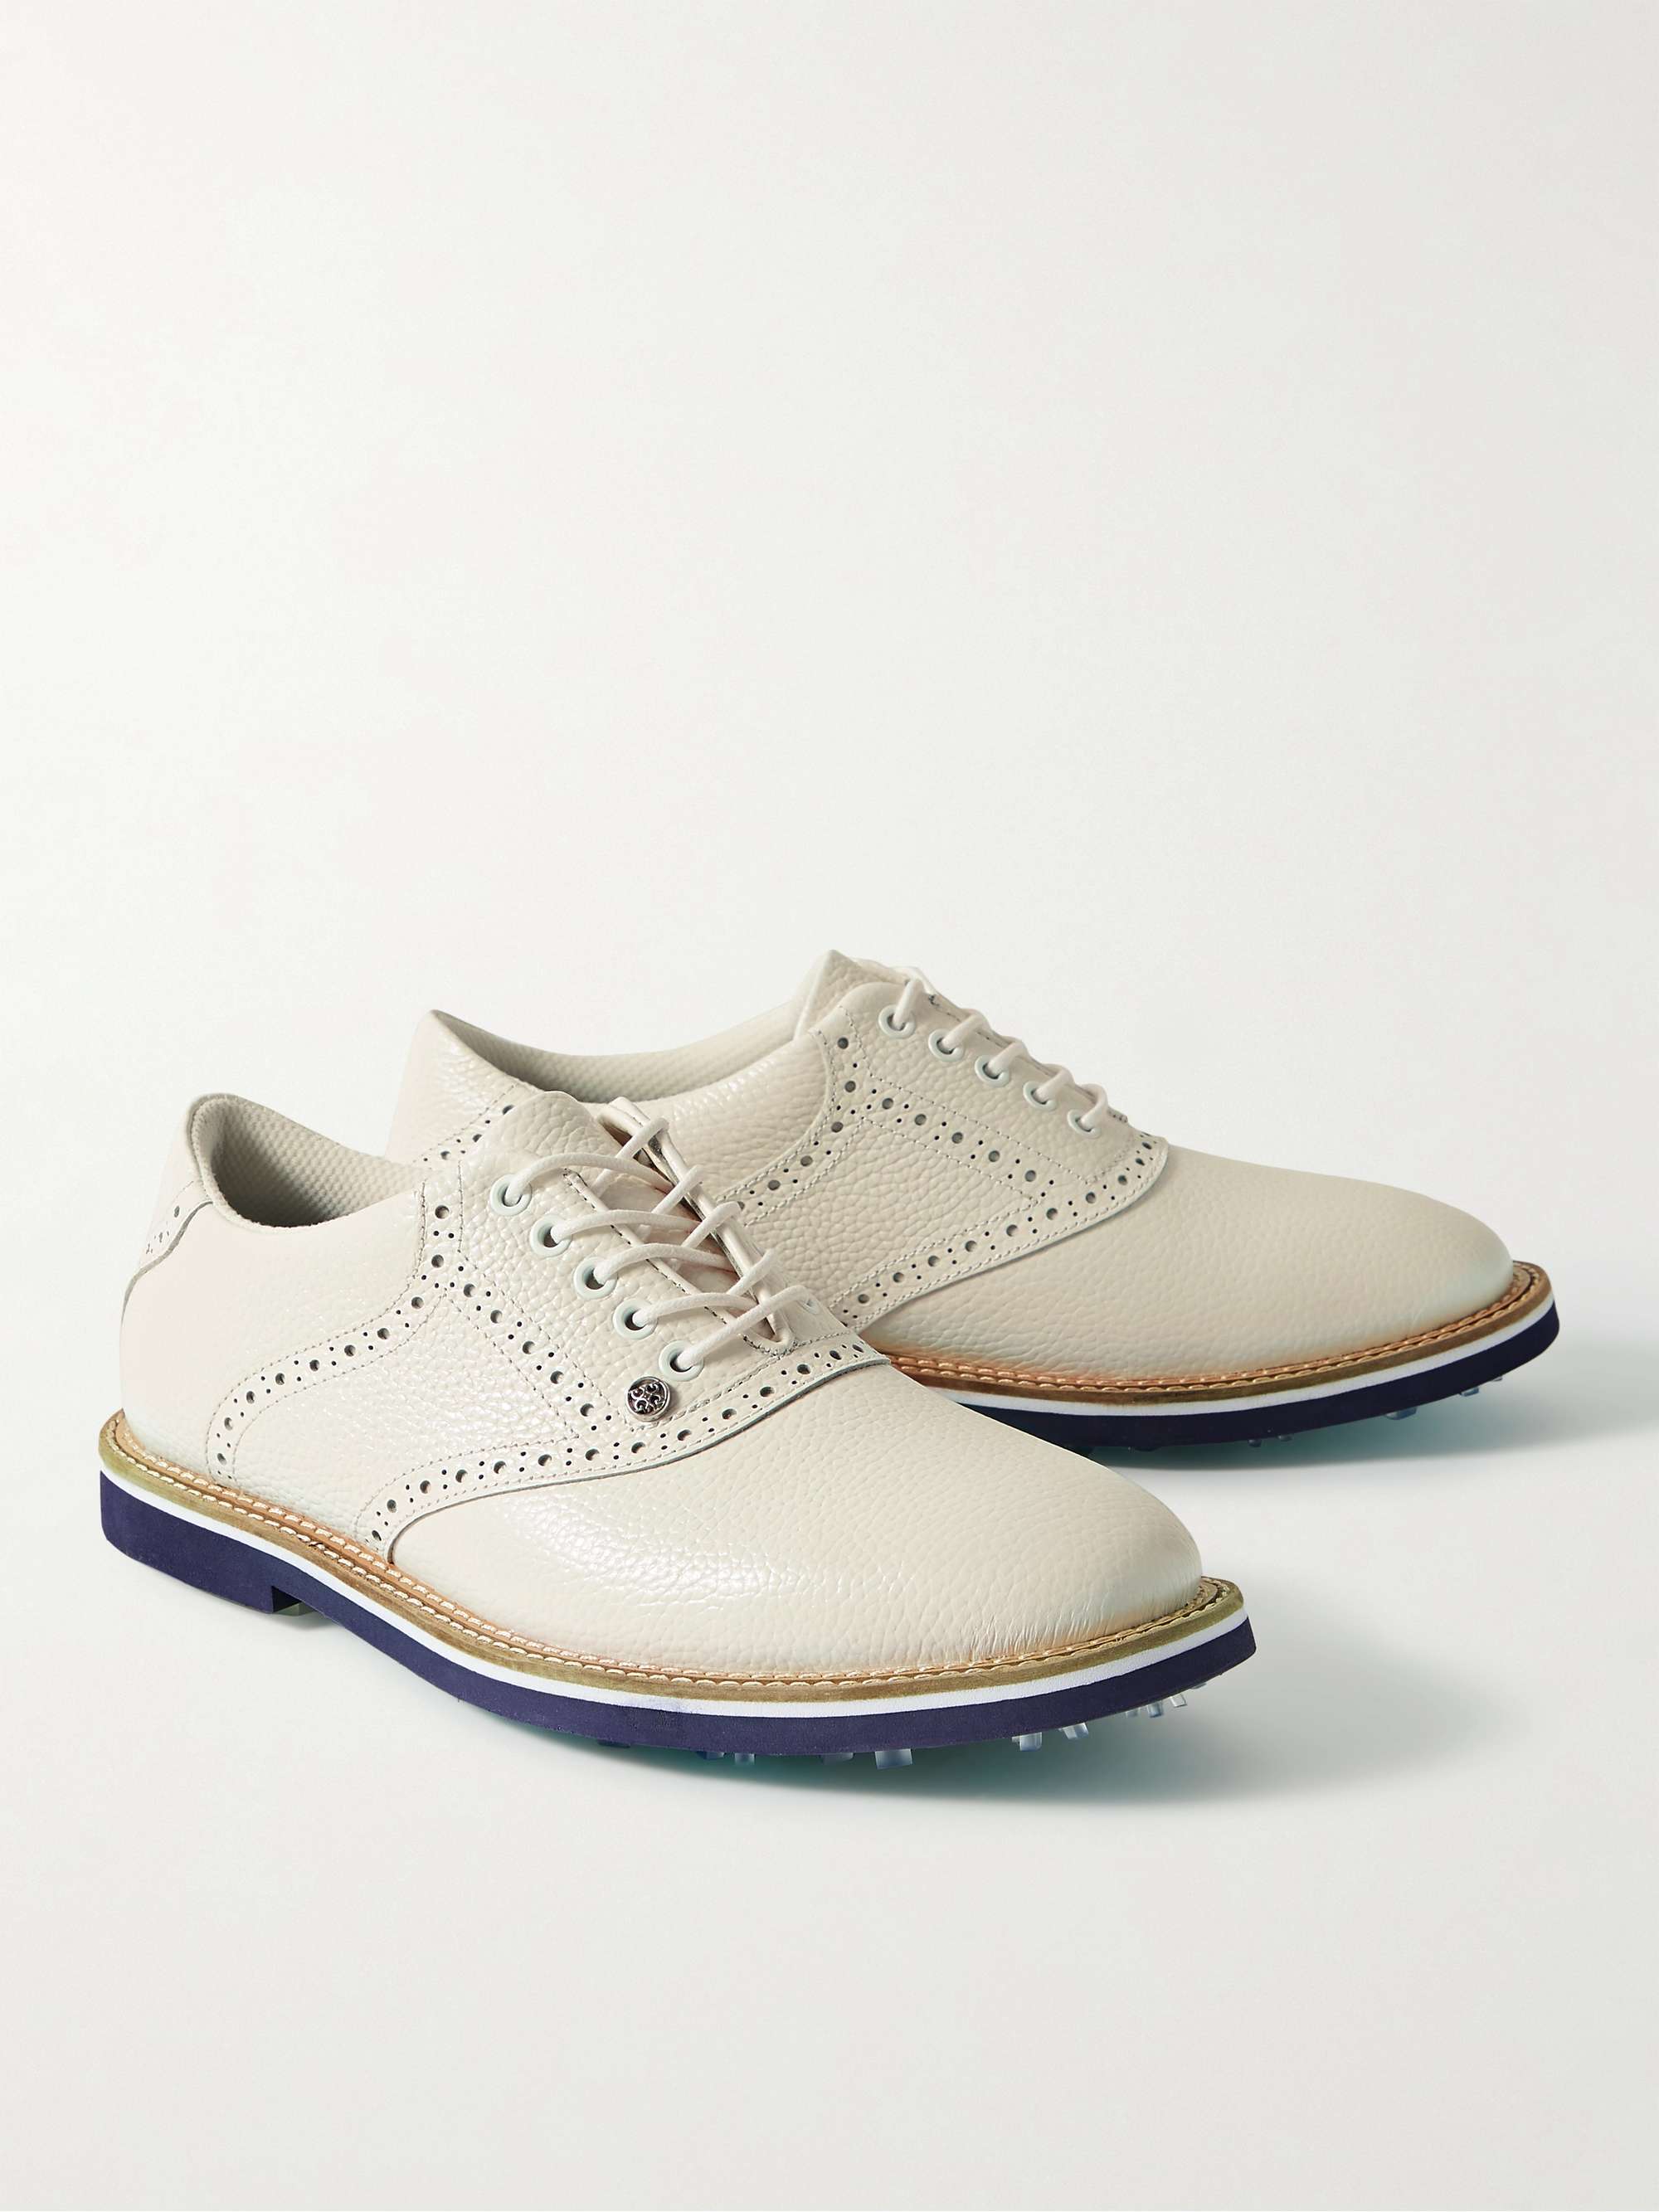 Saddle Gallivanter Pebble-Grain Leather Golf Shoes